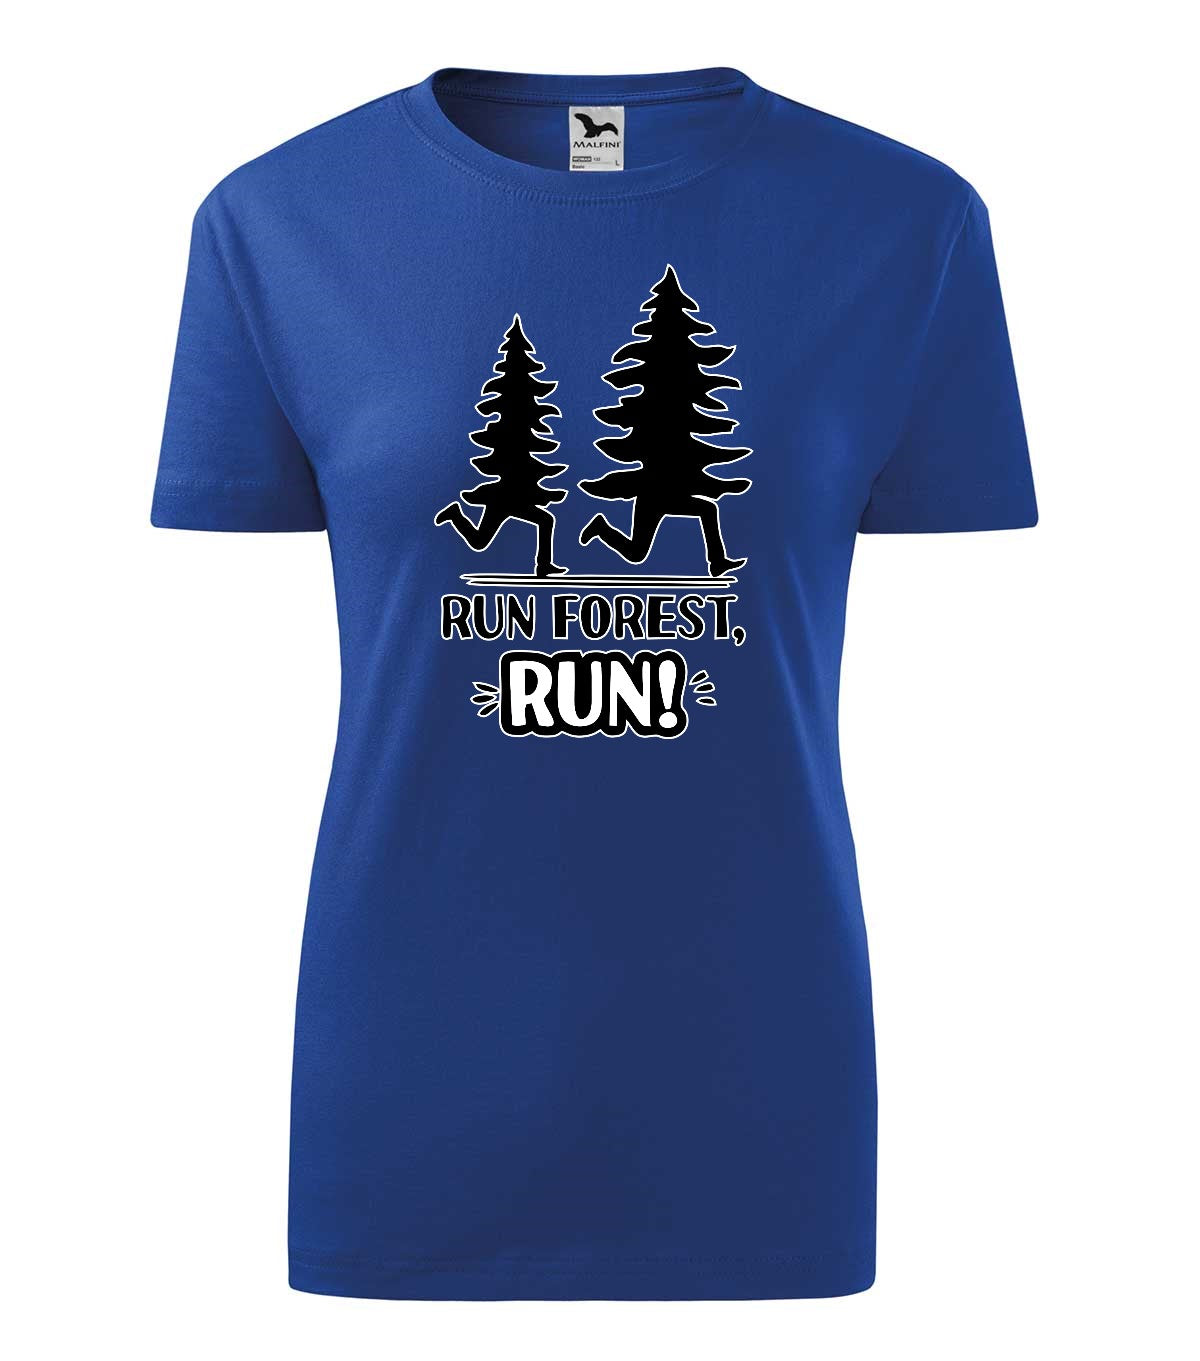 Run Forest, run! női póló